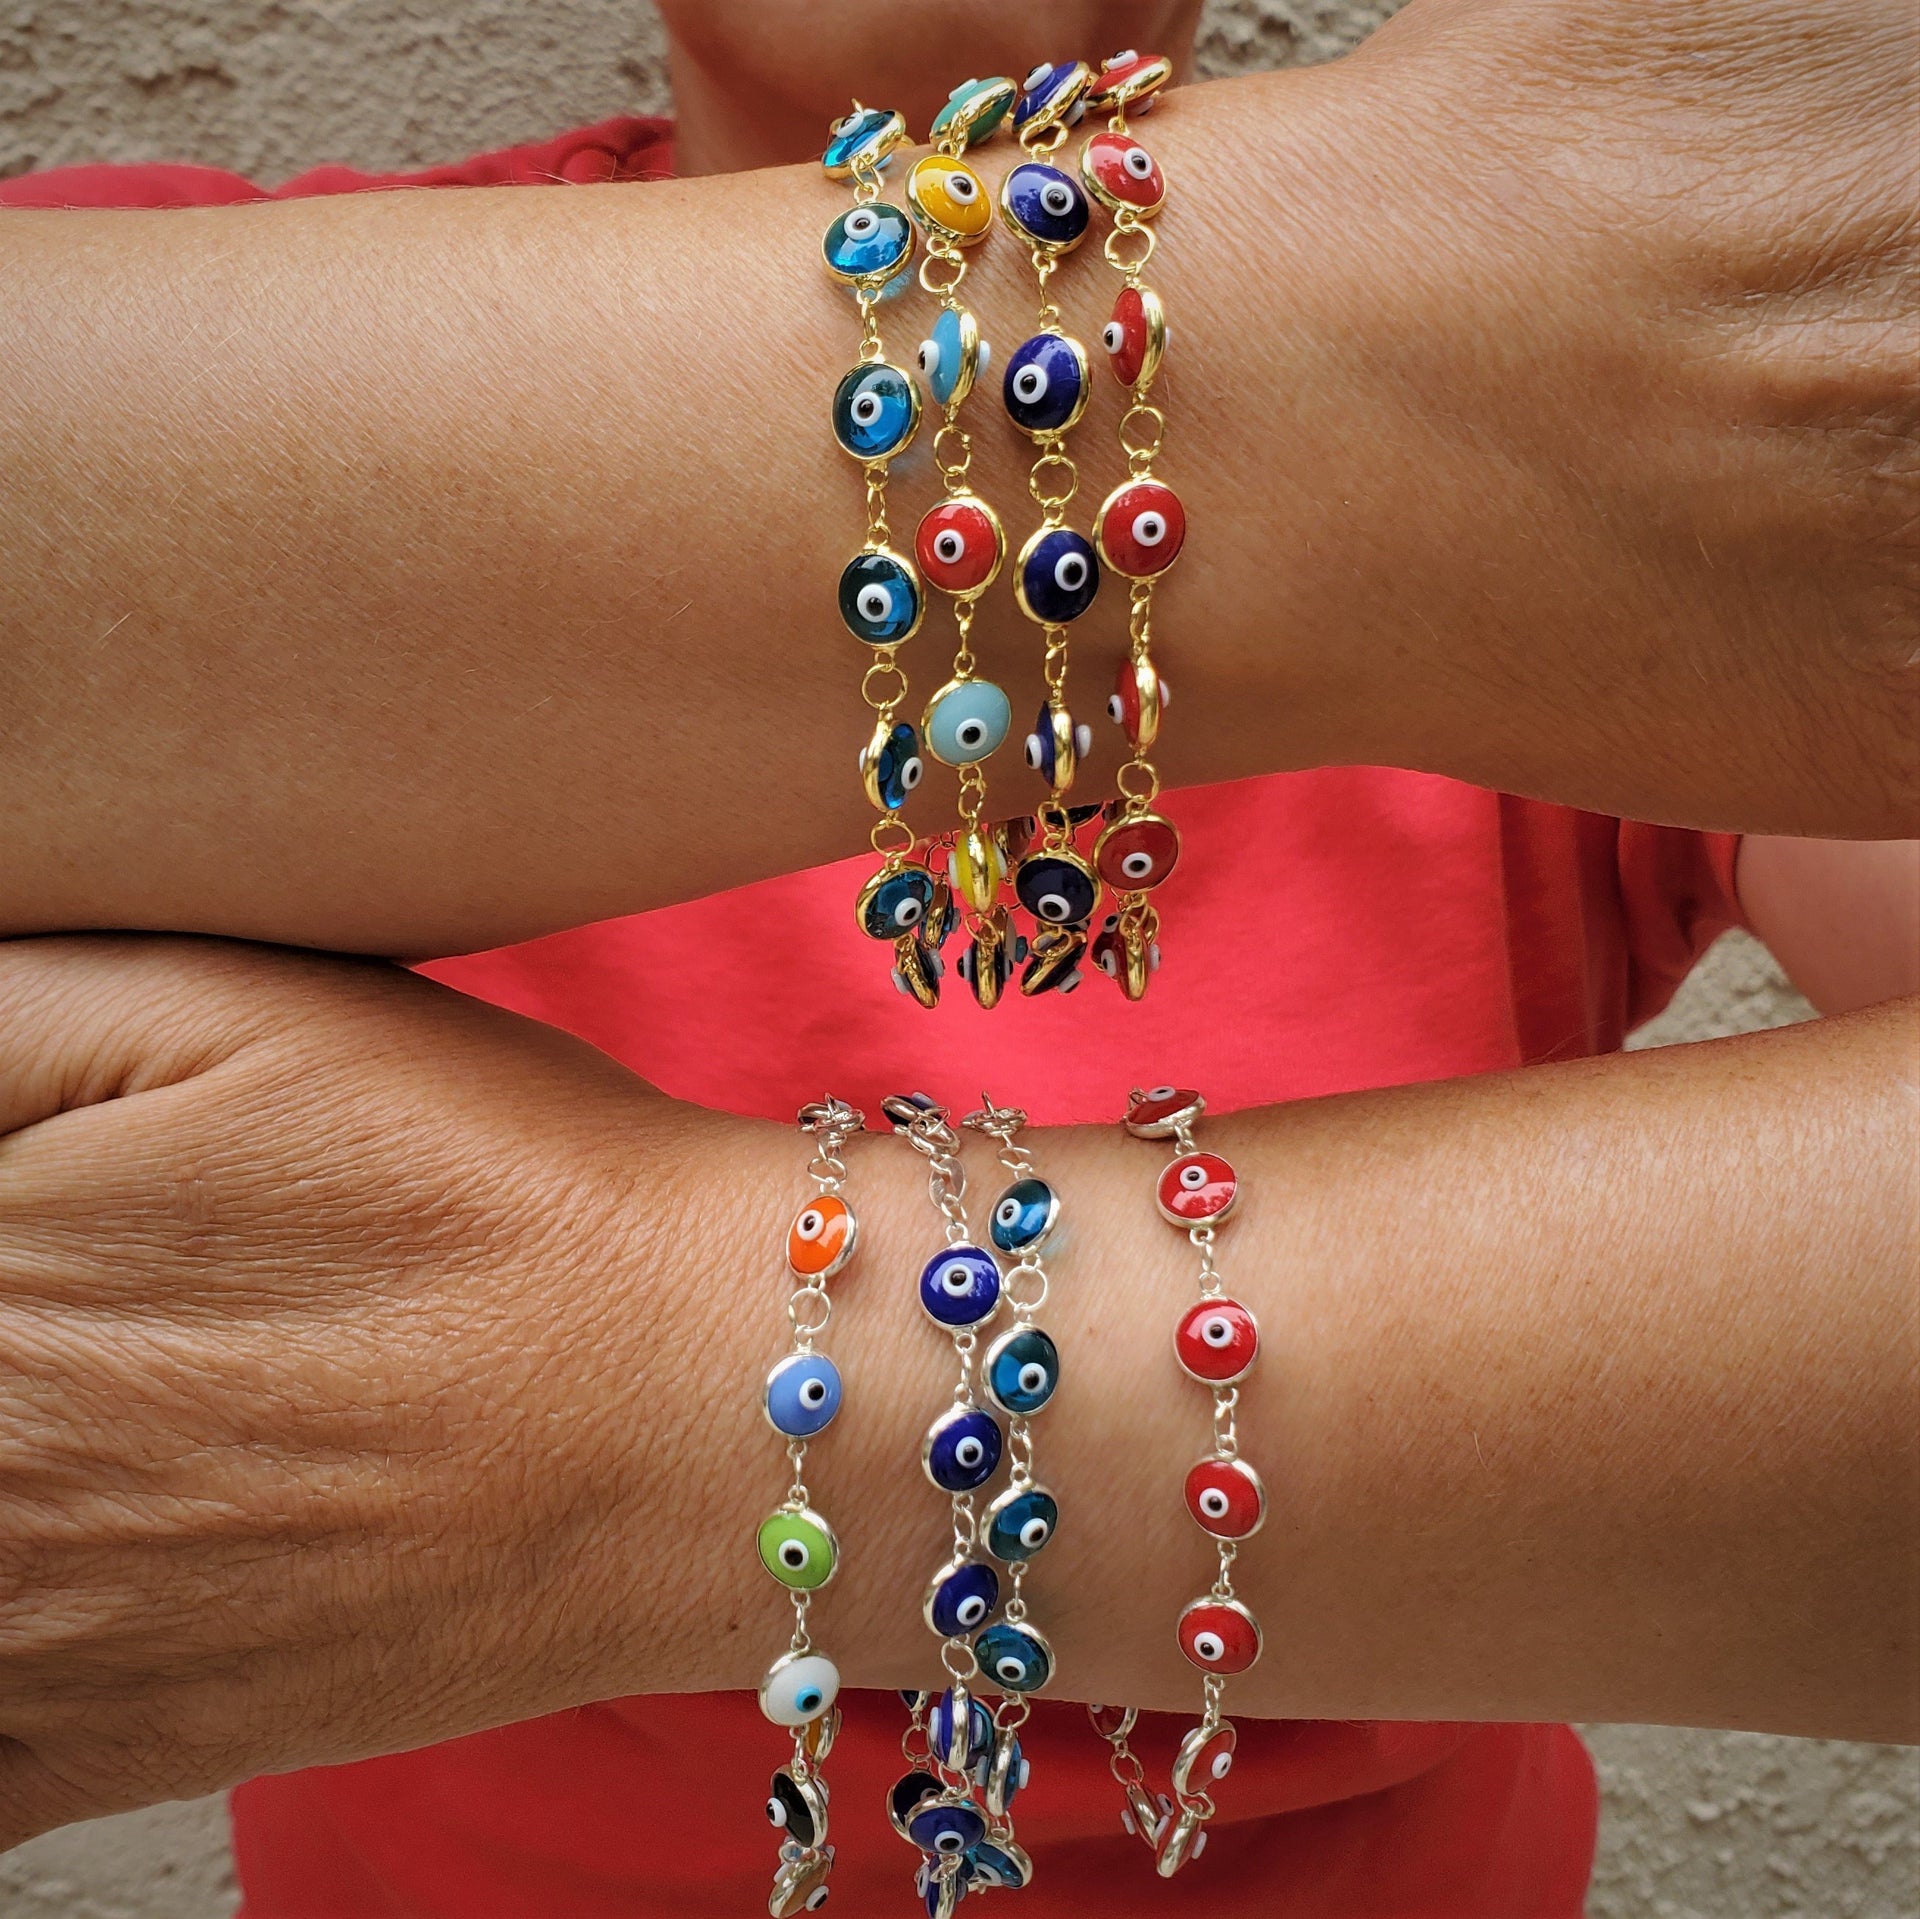 evil eye bracelets in many colors